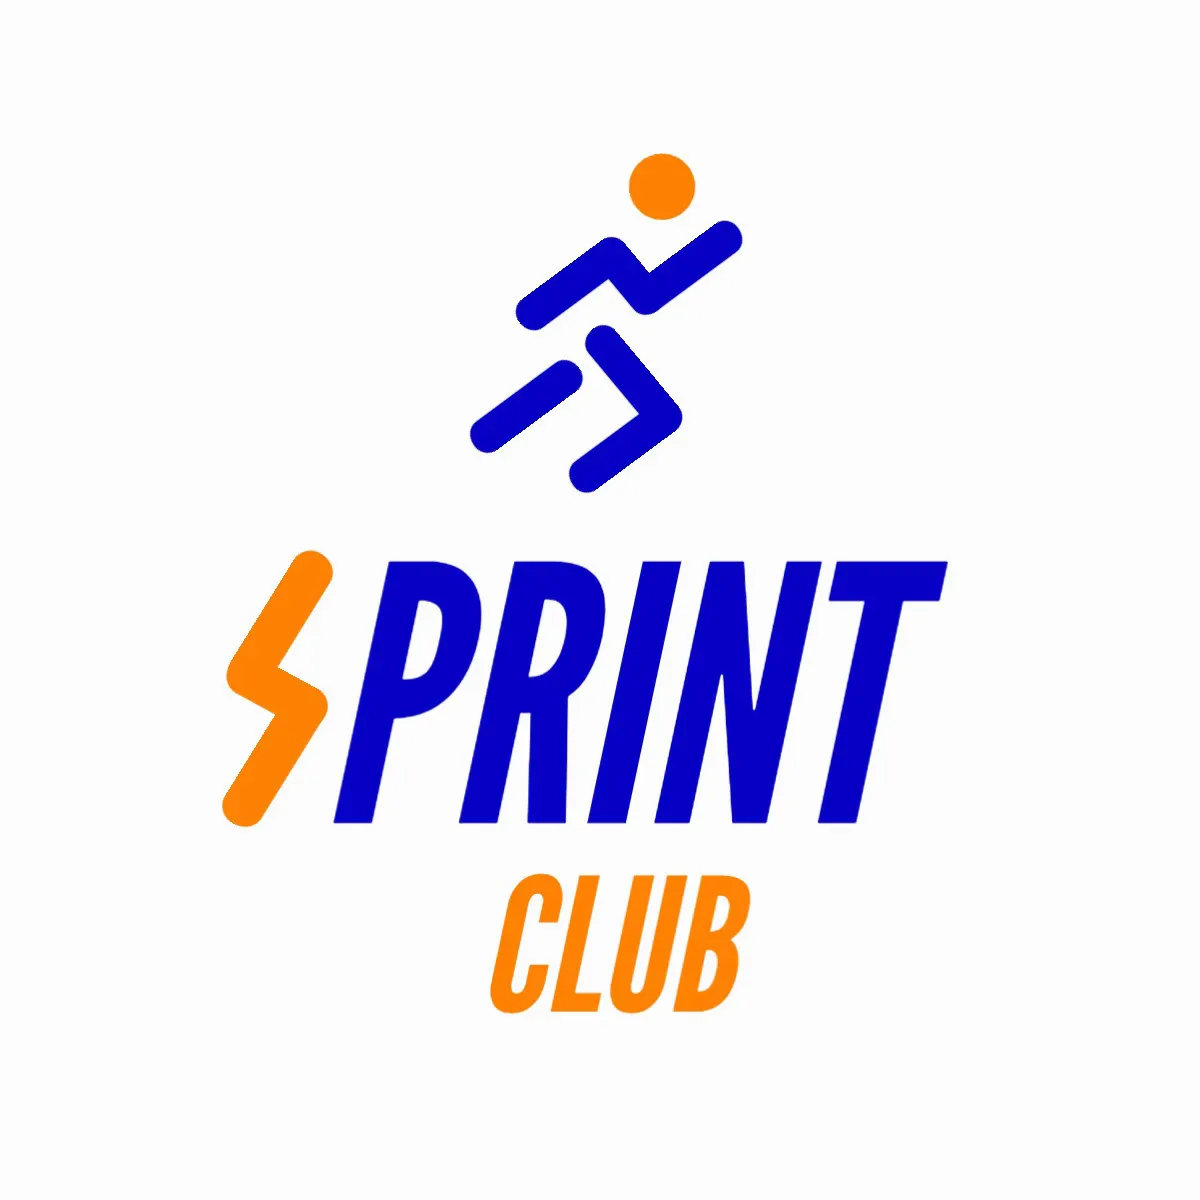 Blue Orange Athletics Club T-Shirt Logo Design